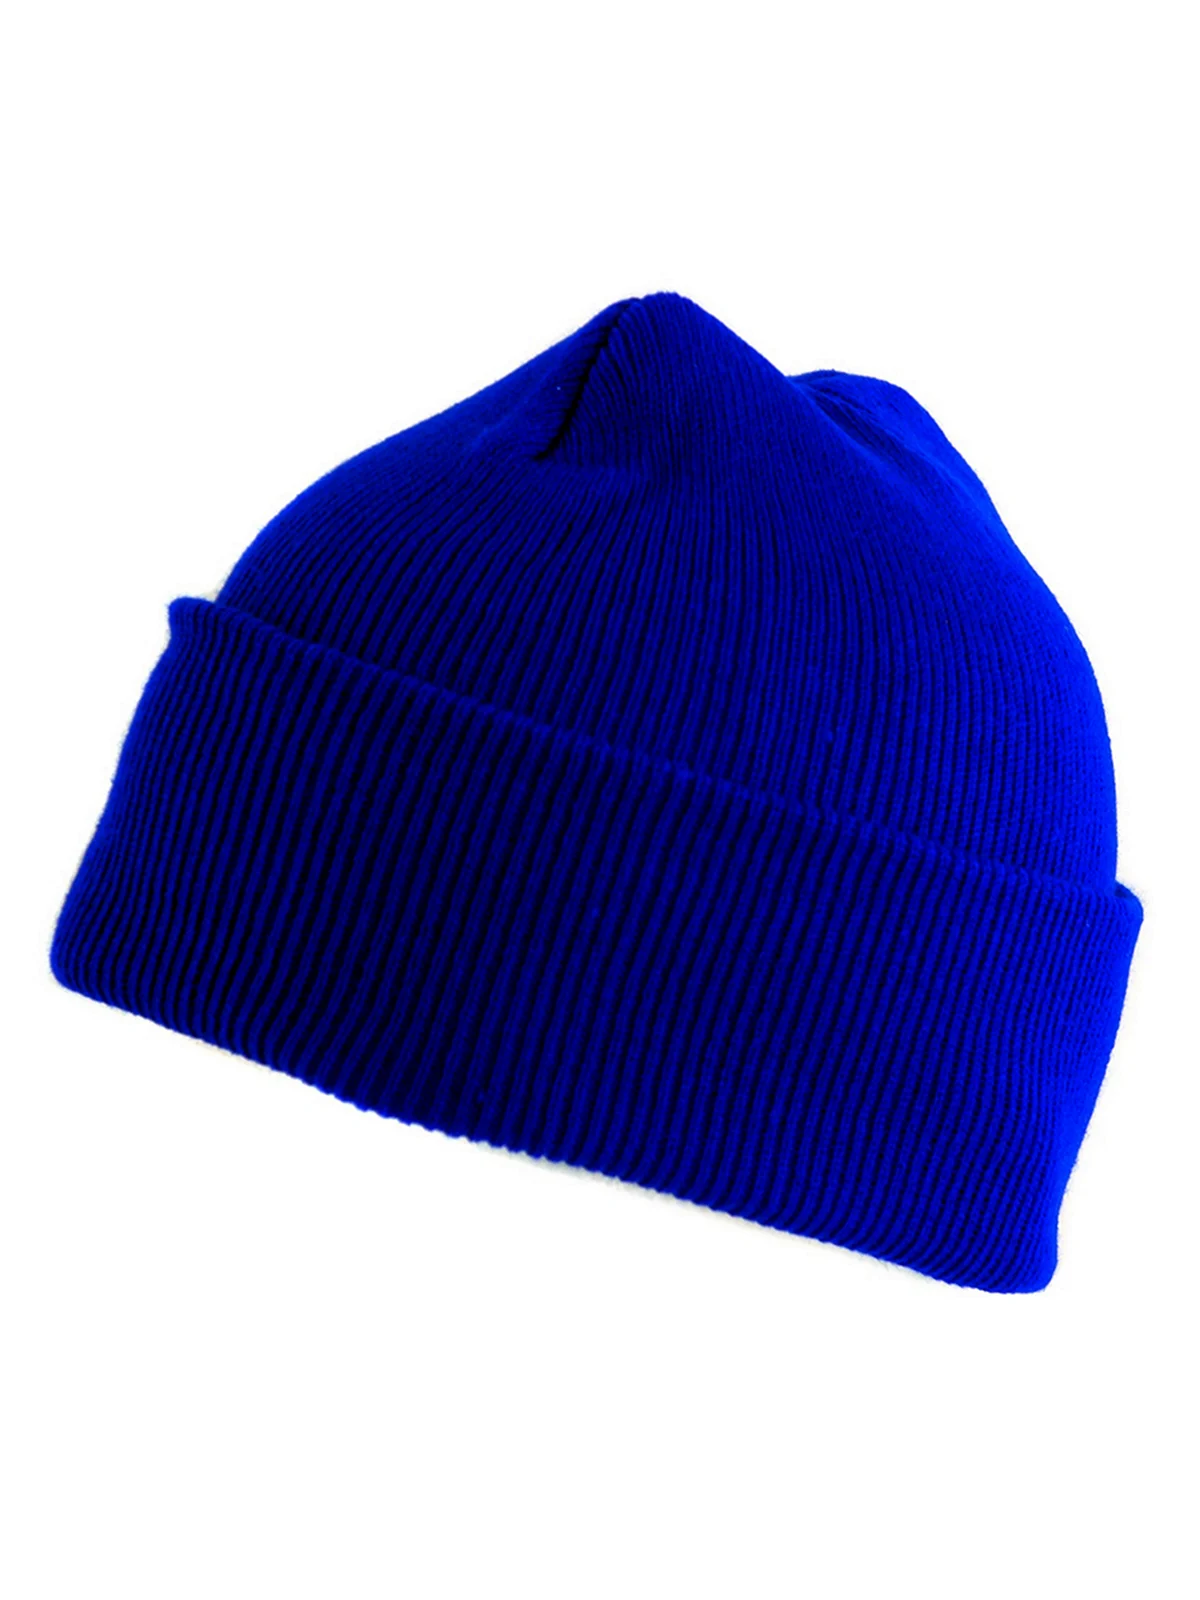 Синяя шапка